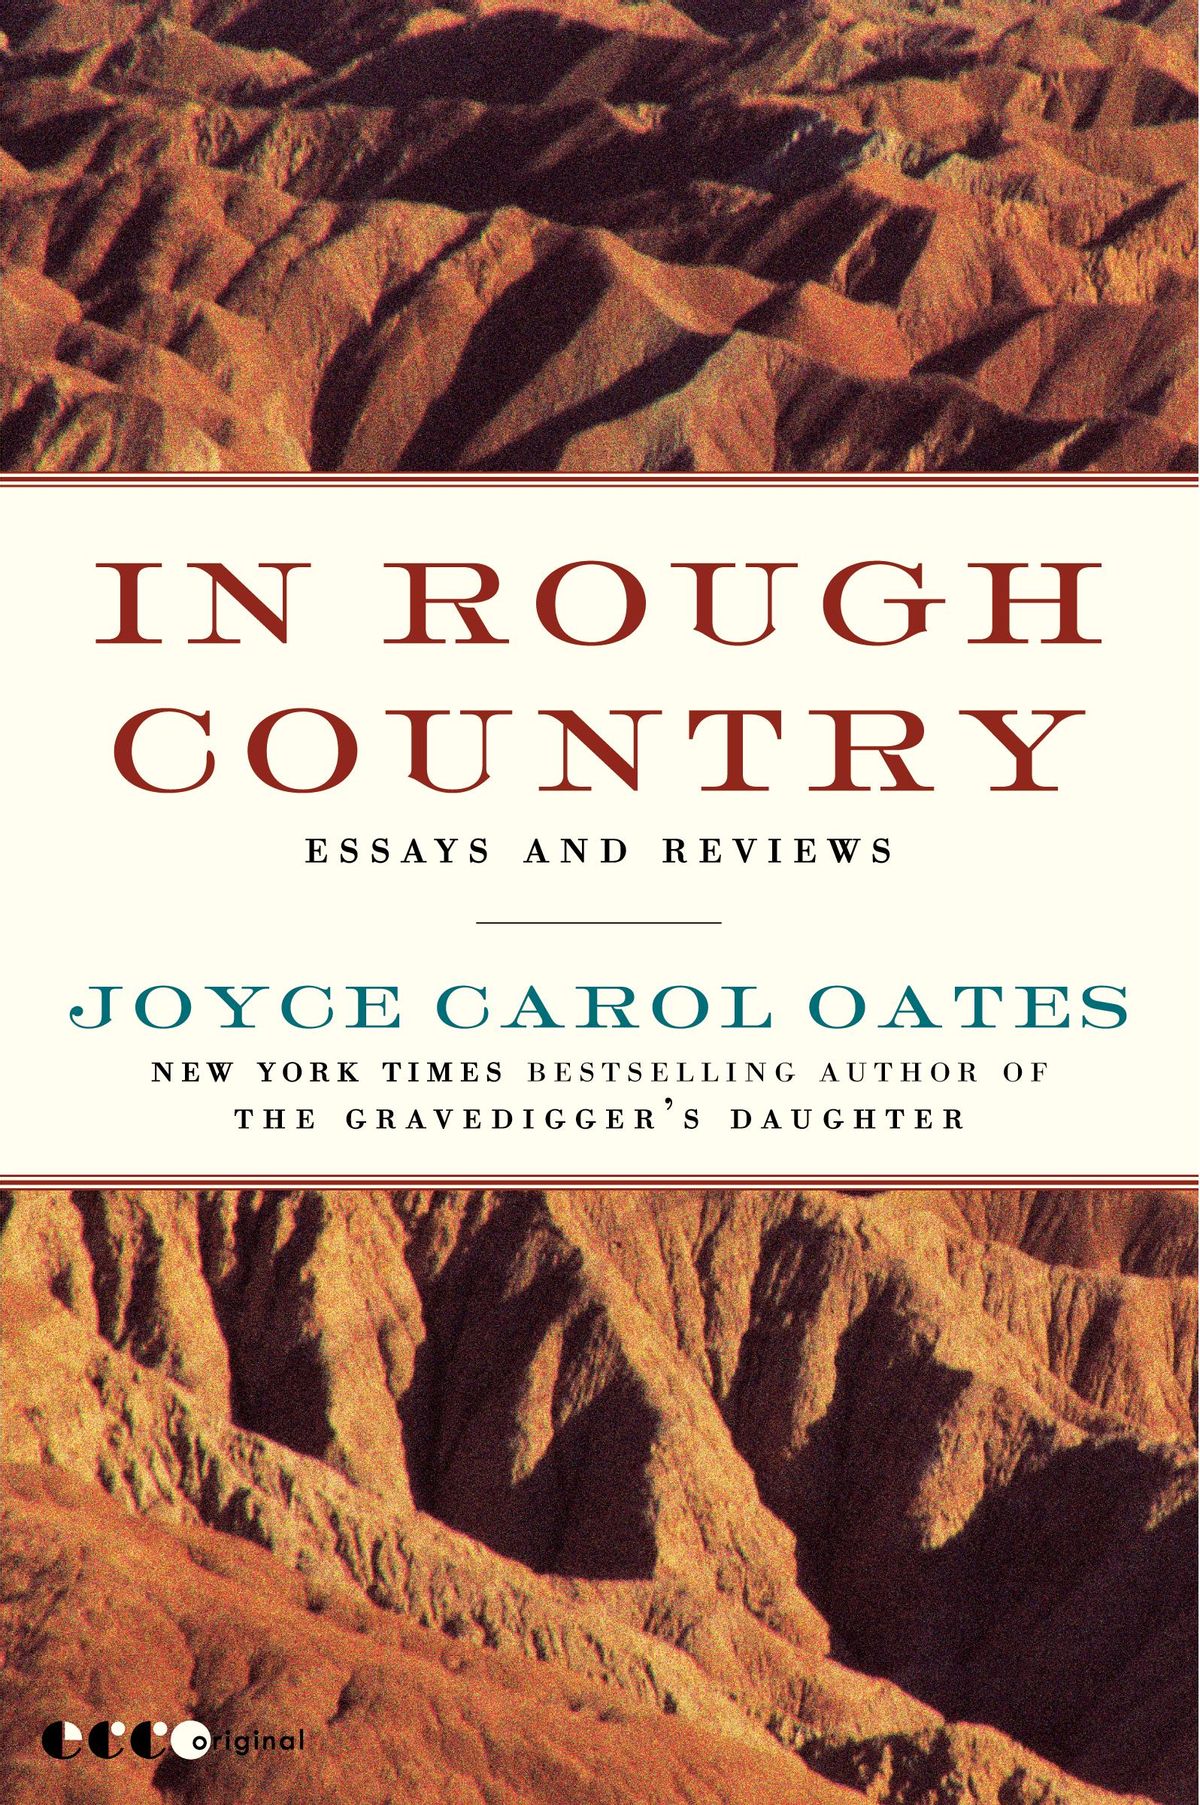 "In Rough Country", by Joyce Carol Oates  